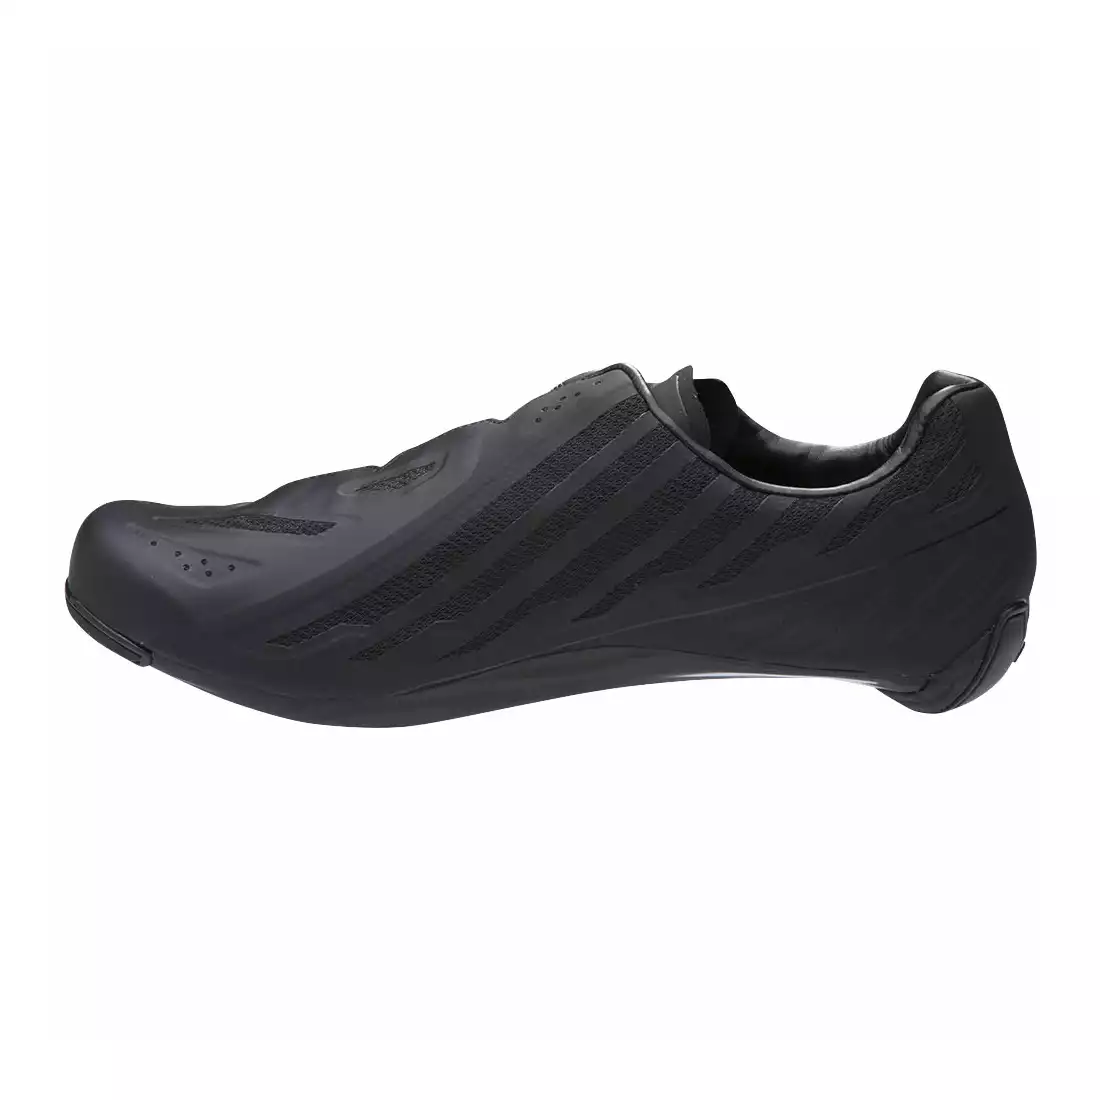 PEARL IZUMI Race Road V5 15101801 - męskie buty rowerowe, szosowe, black/black